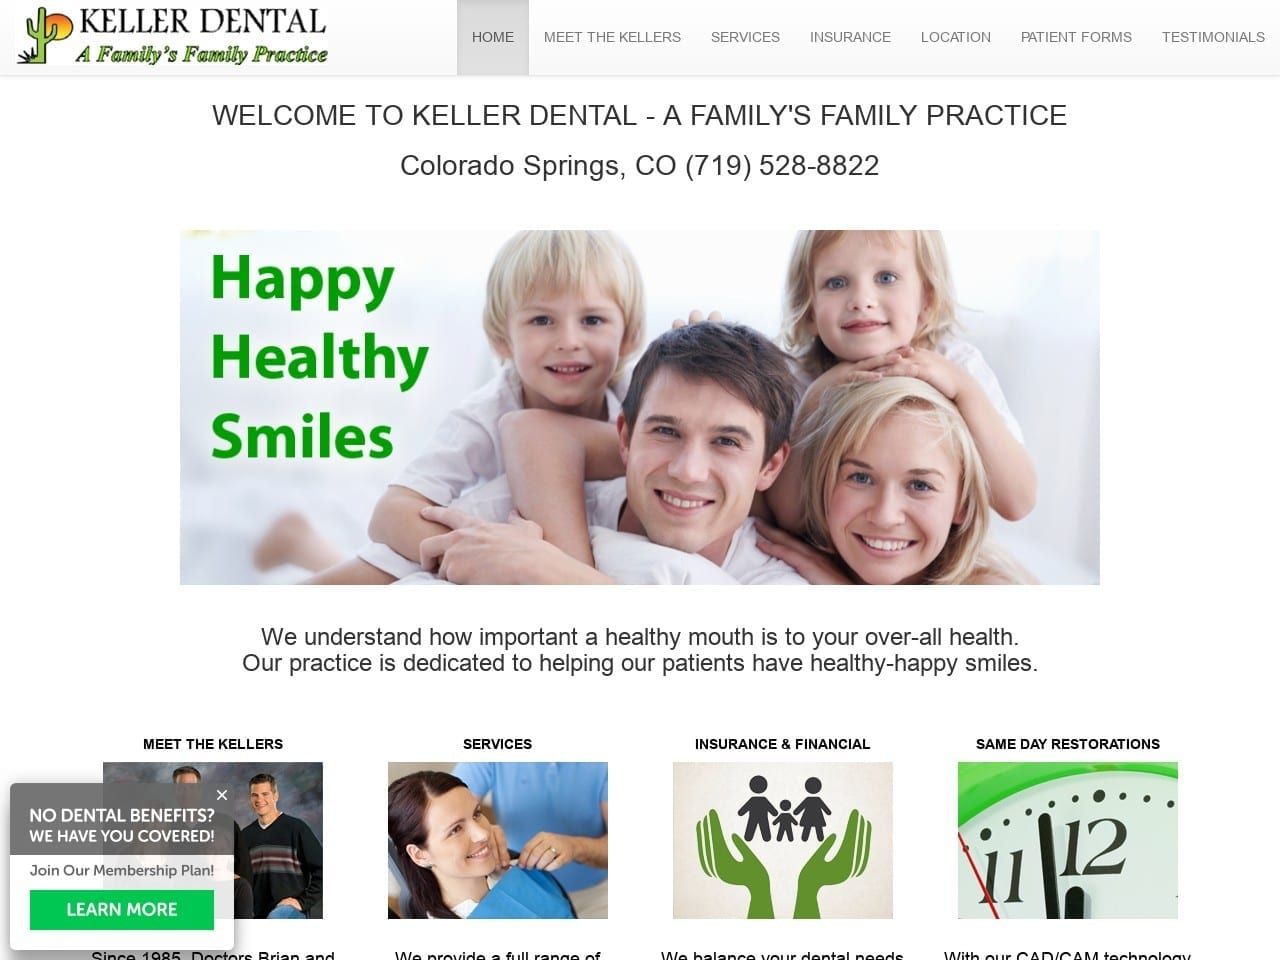 Keller Dental Care Website Screenshot from kellerdental.com